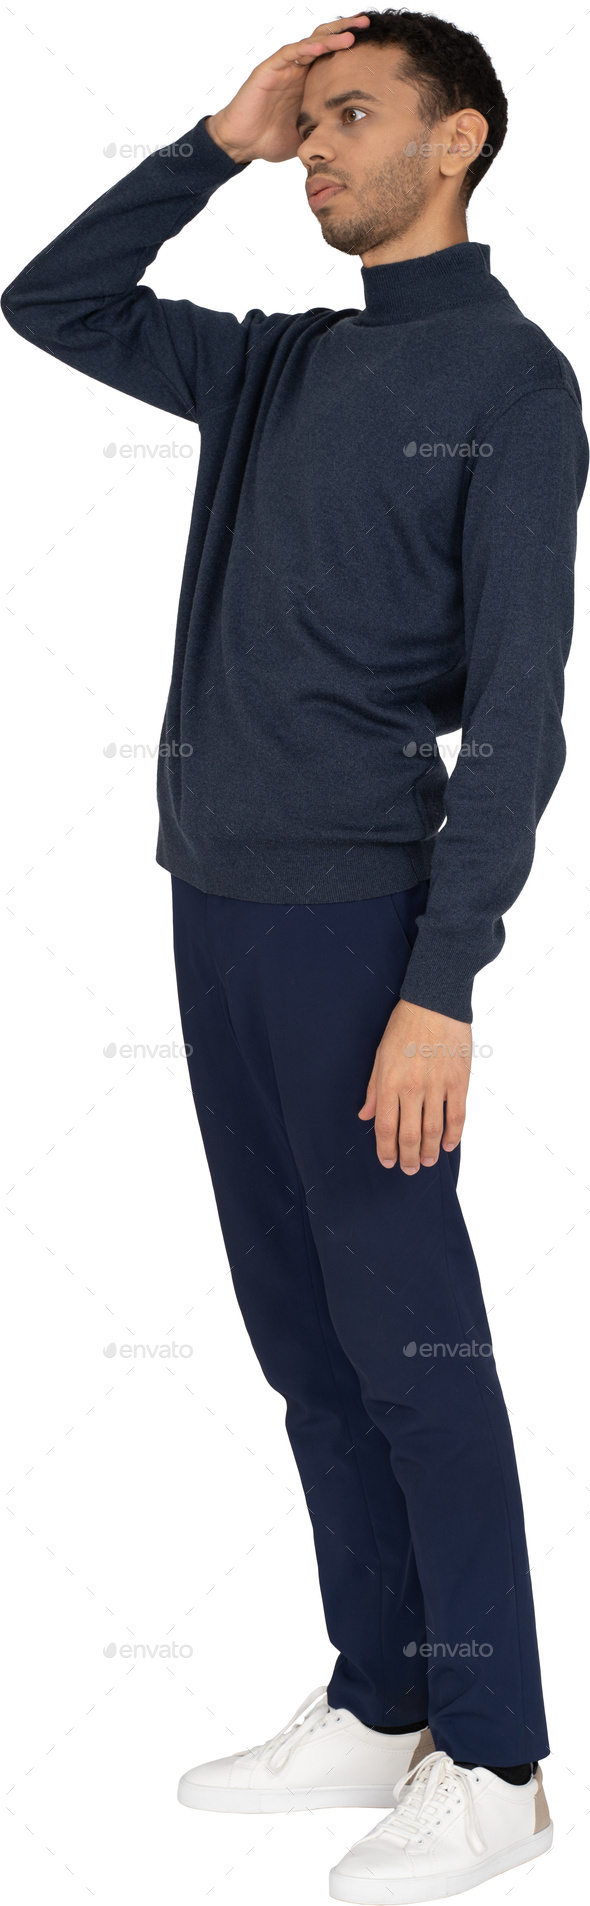 a man wearing a navy blue sweatshirt and navy blue pants